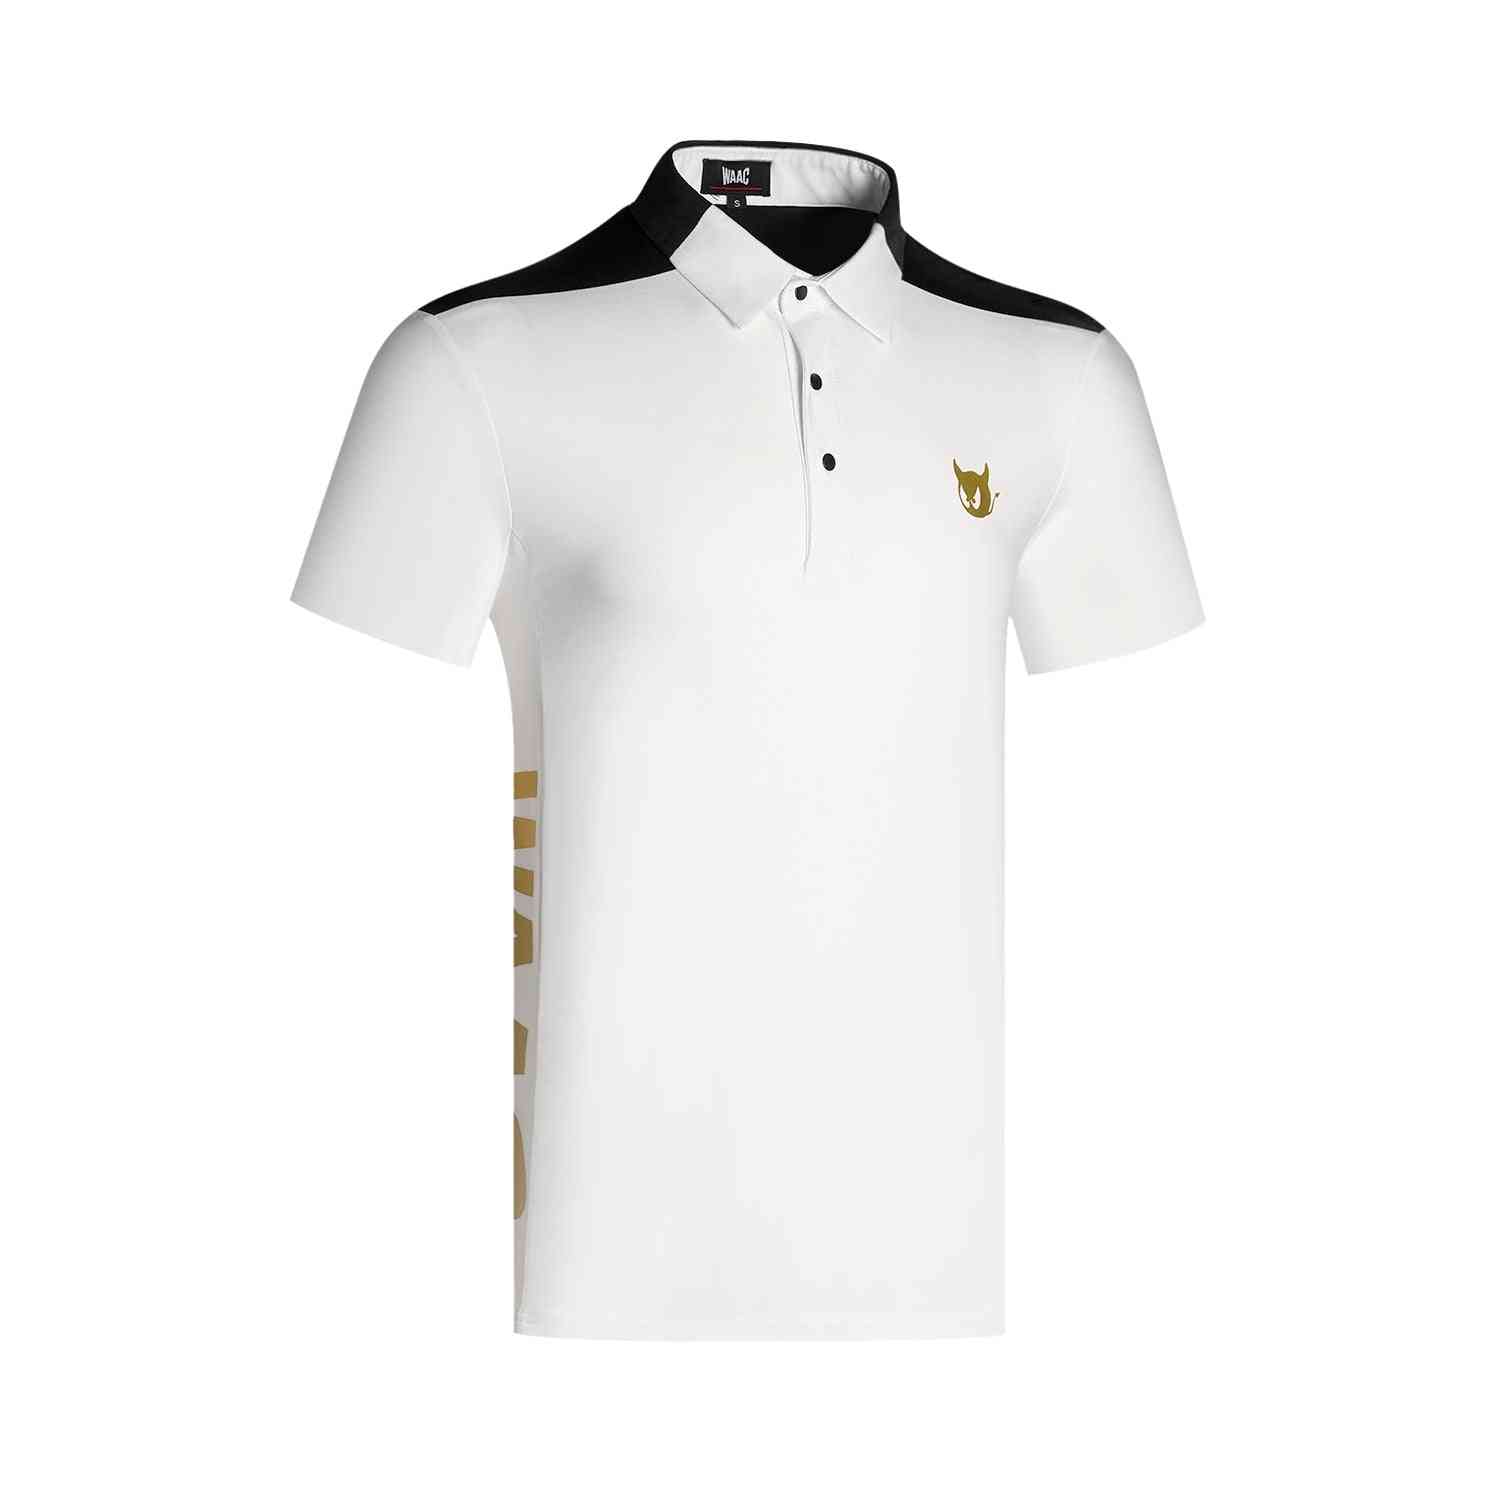 Spring Men Golf Shirt, Short Sleeve Quick Dry Turndown Collar Clothing